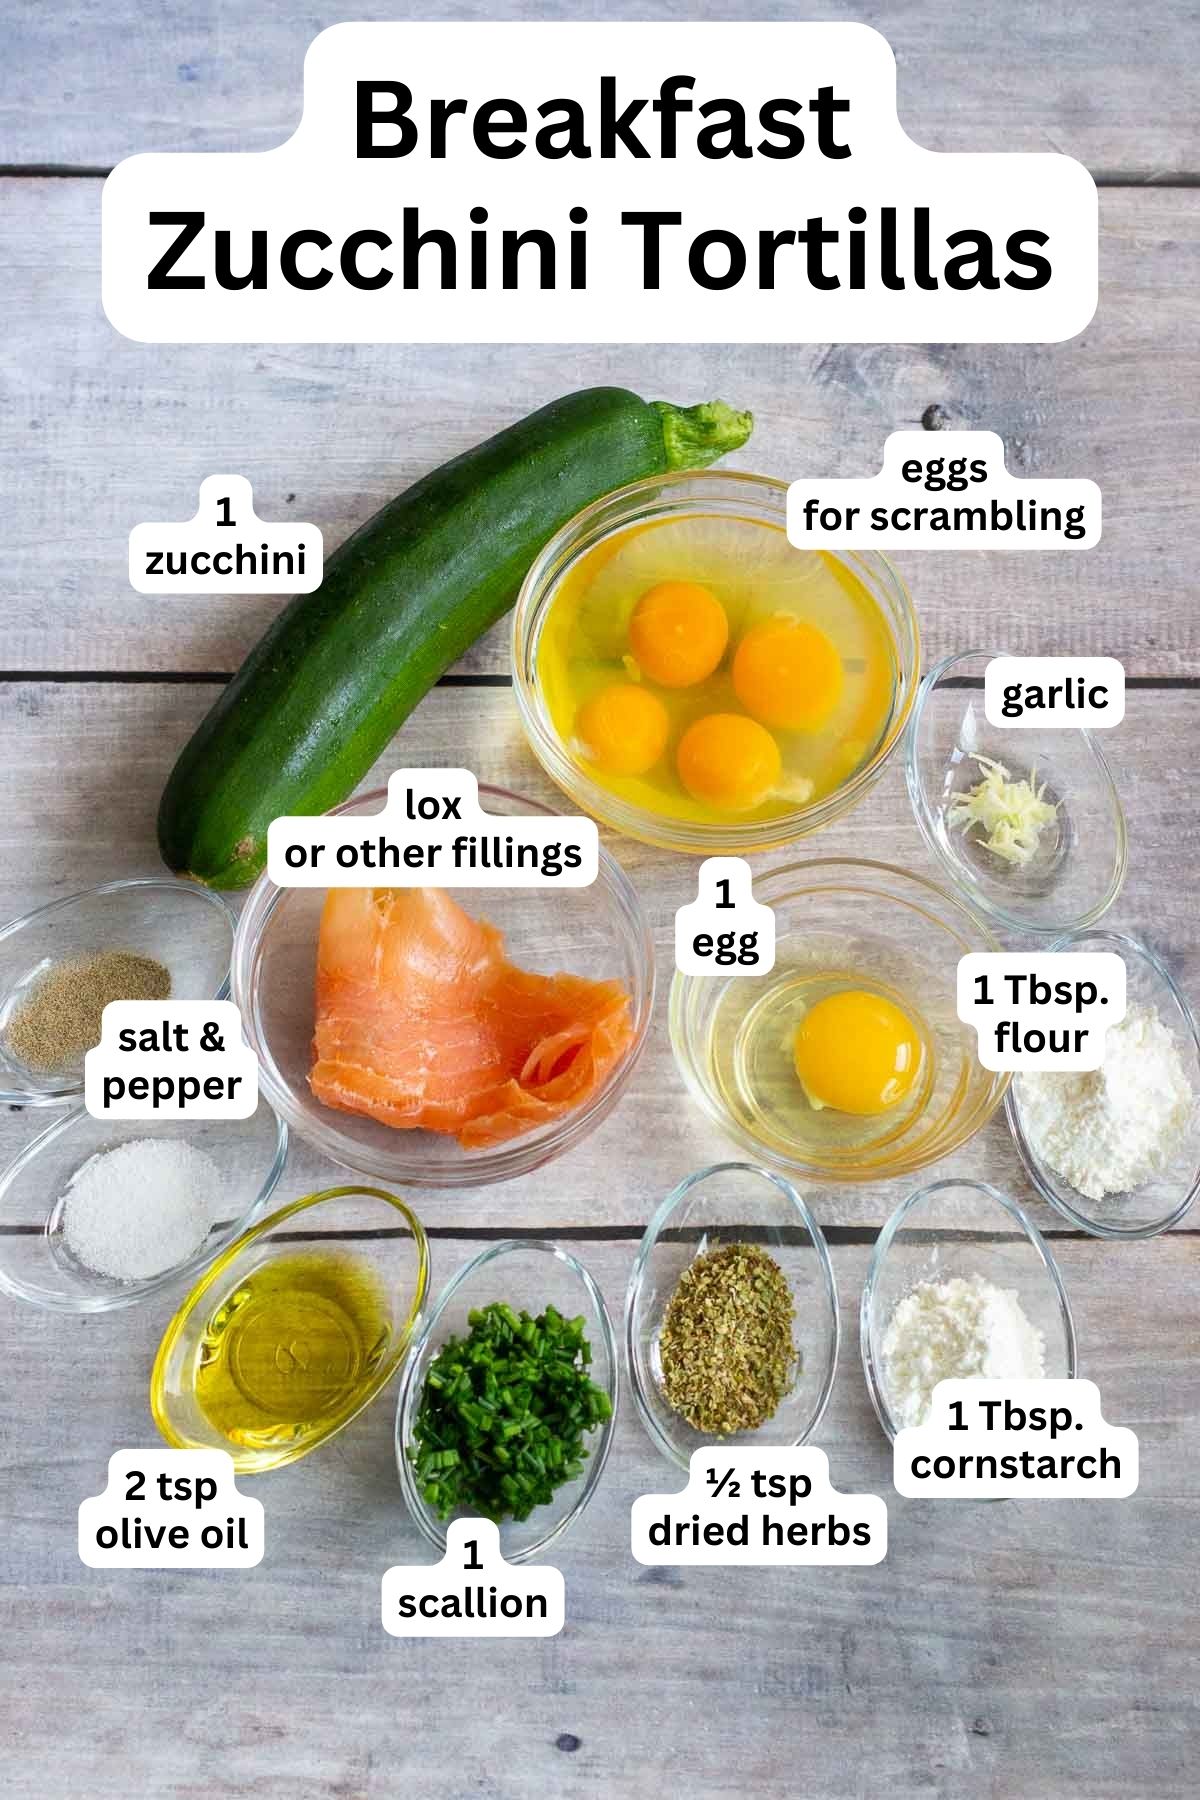 Ingredients to make zucchini tortillas